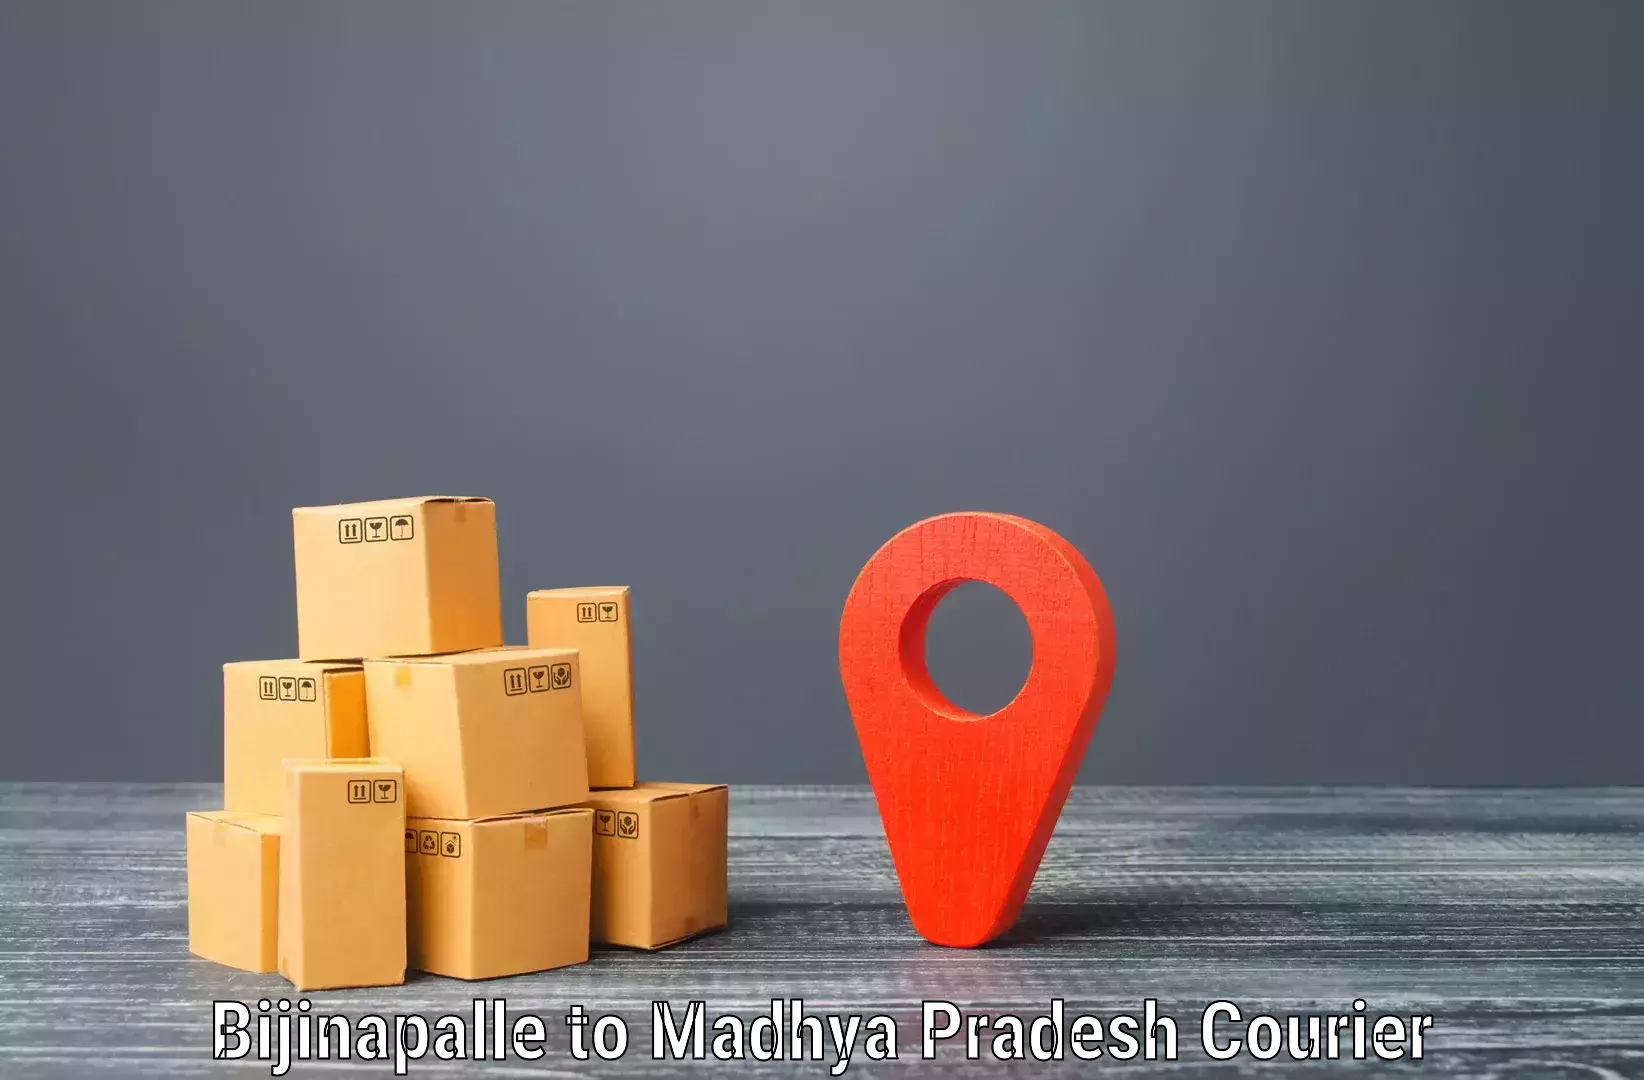 Professional courier handling Bijinapalle to Garoth